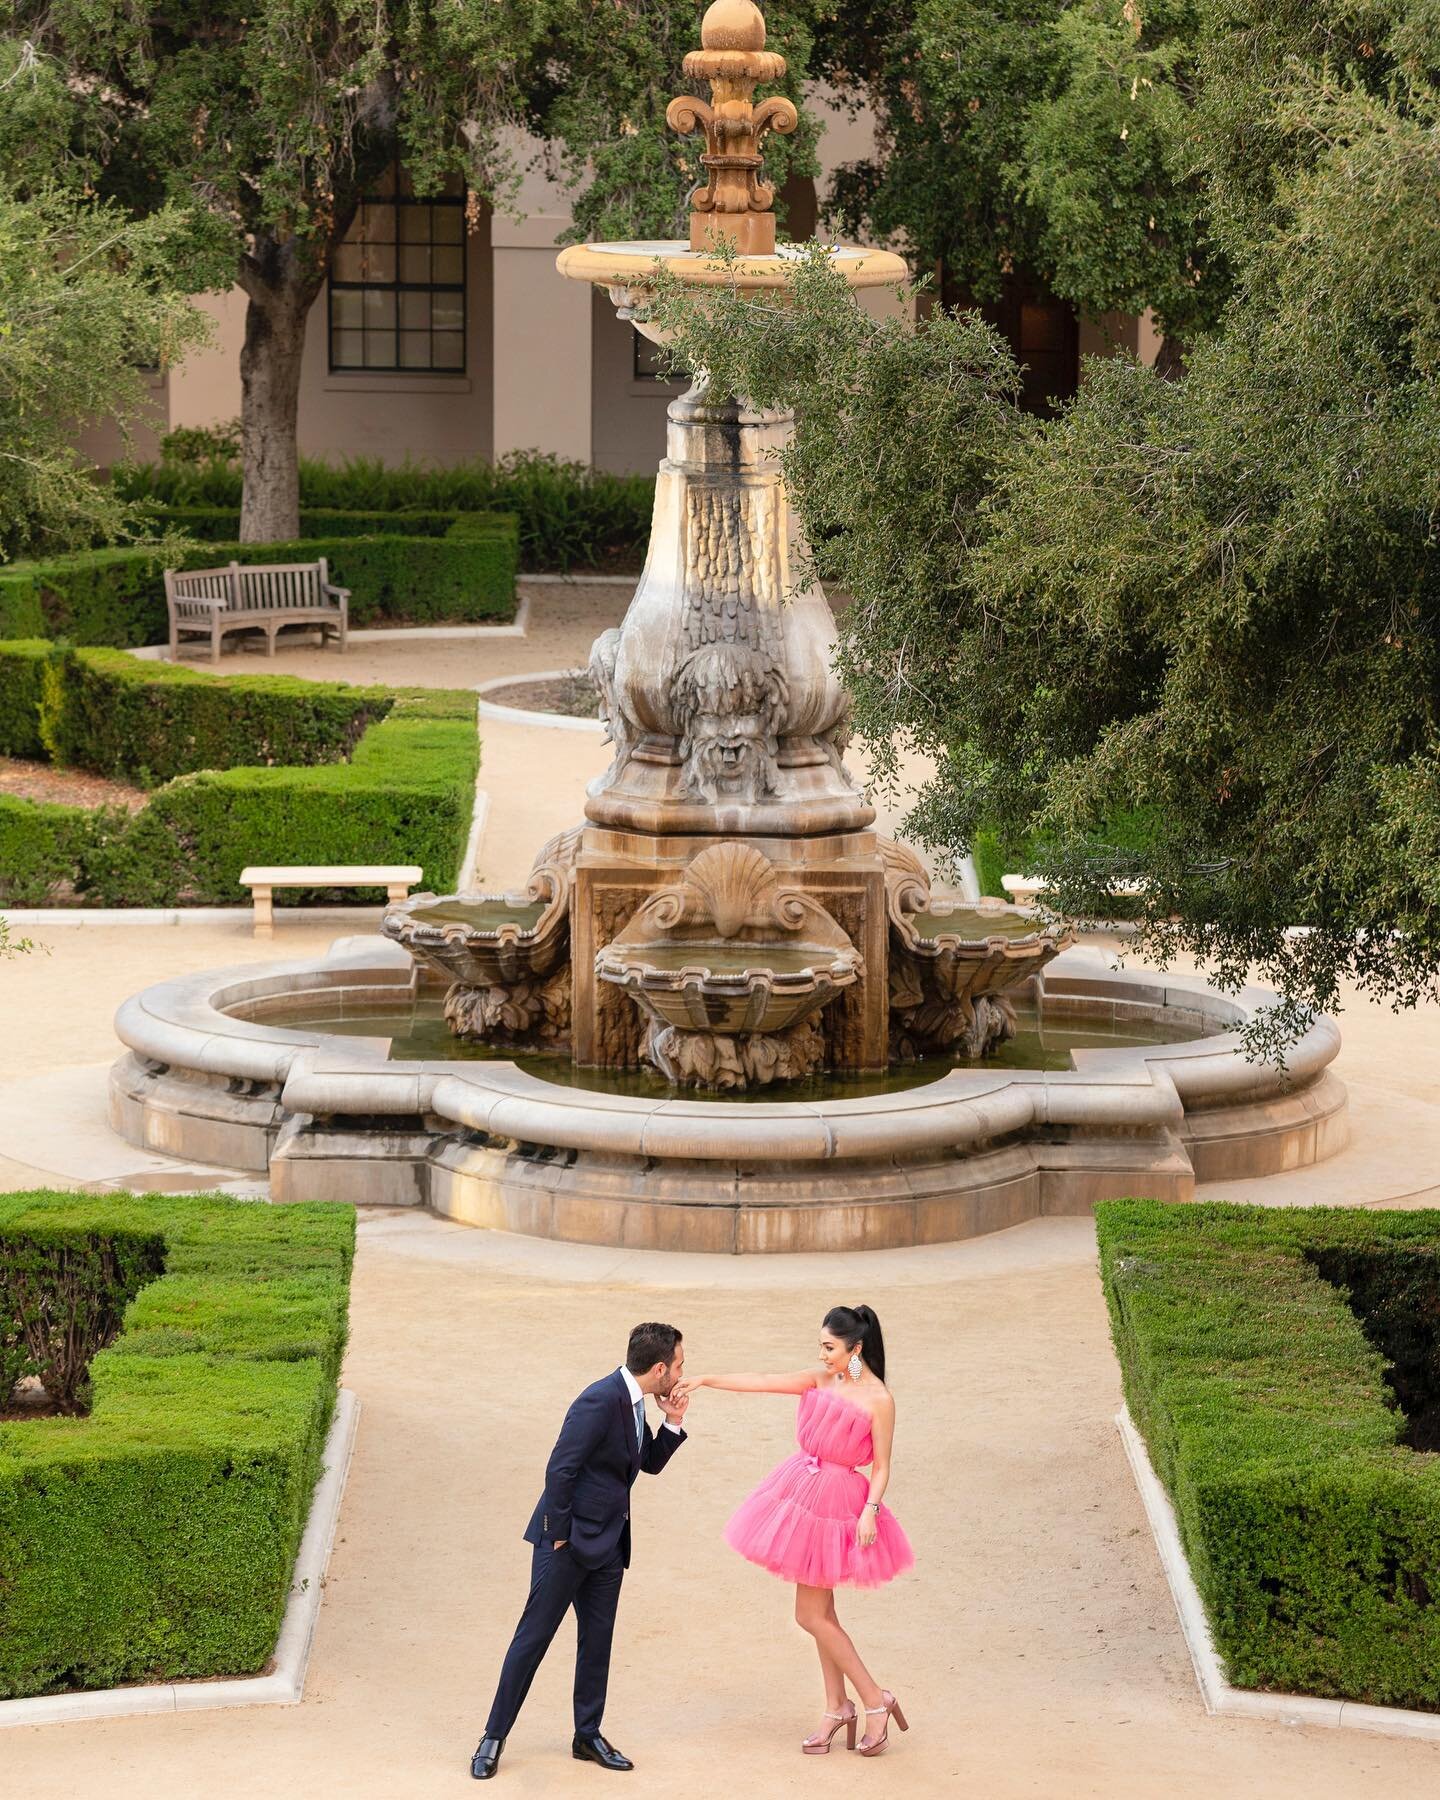 She said Yes! Engagement photoshoot at the gorgeous Pasadena City Hall! 
#dukeimages 

#engagementphotos #engaged #gettingmarried #engagment #weddingphotography #shesaidyes